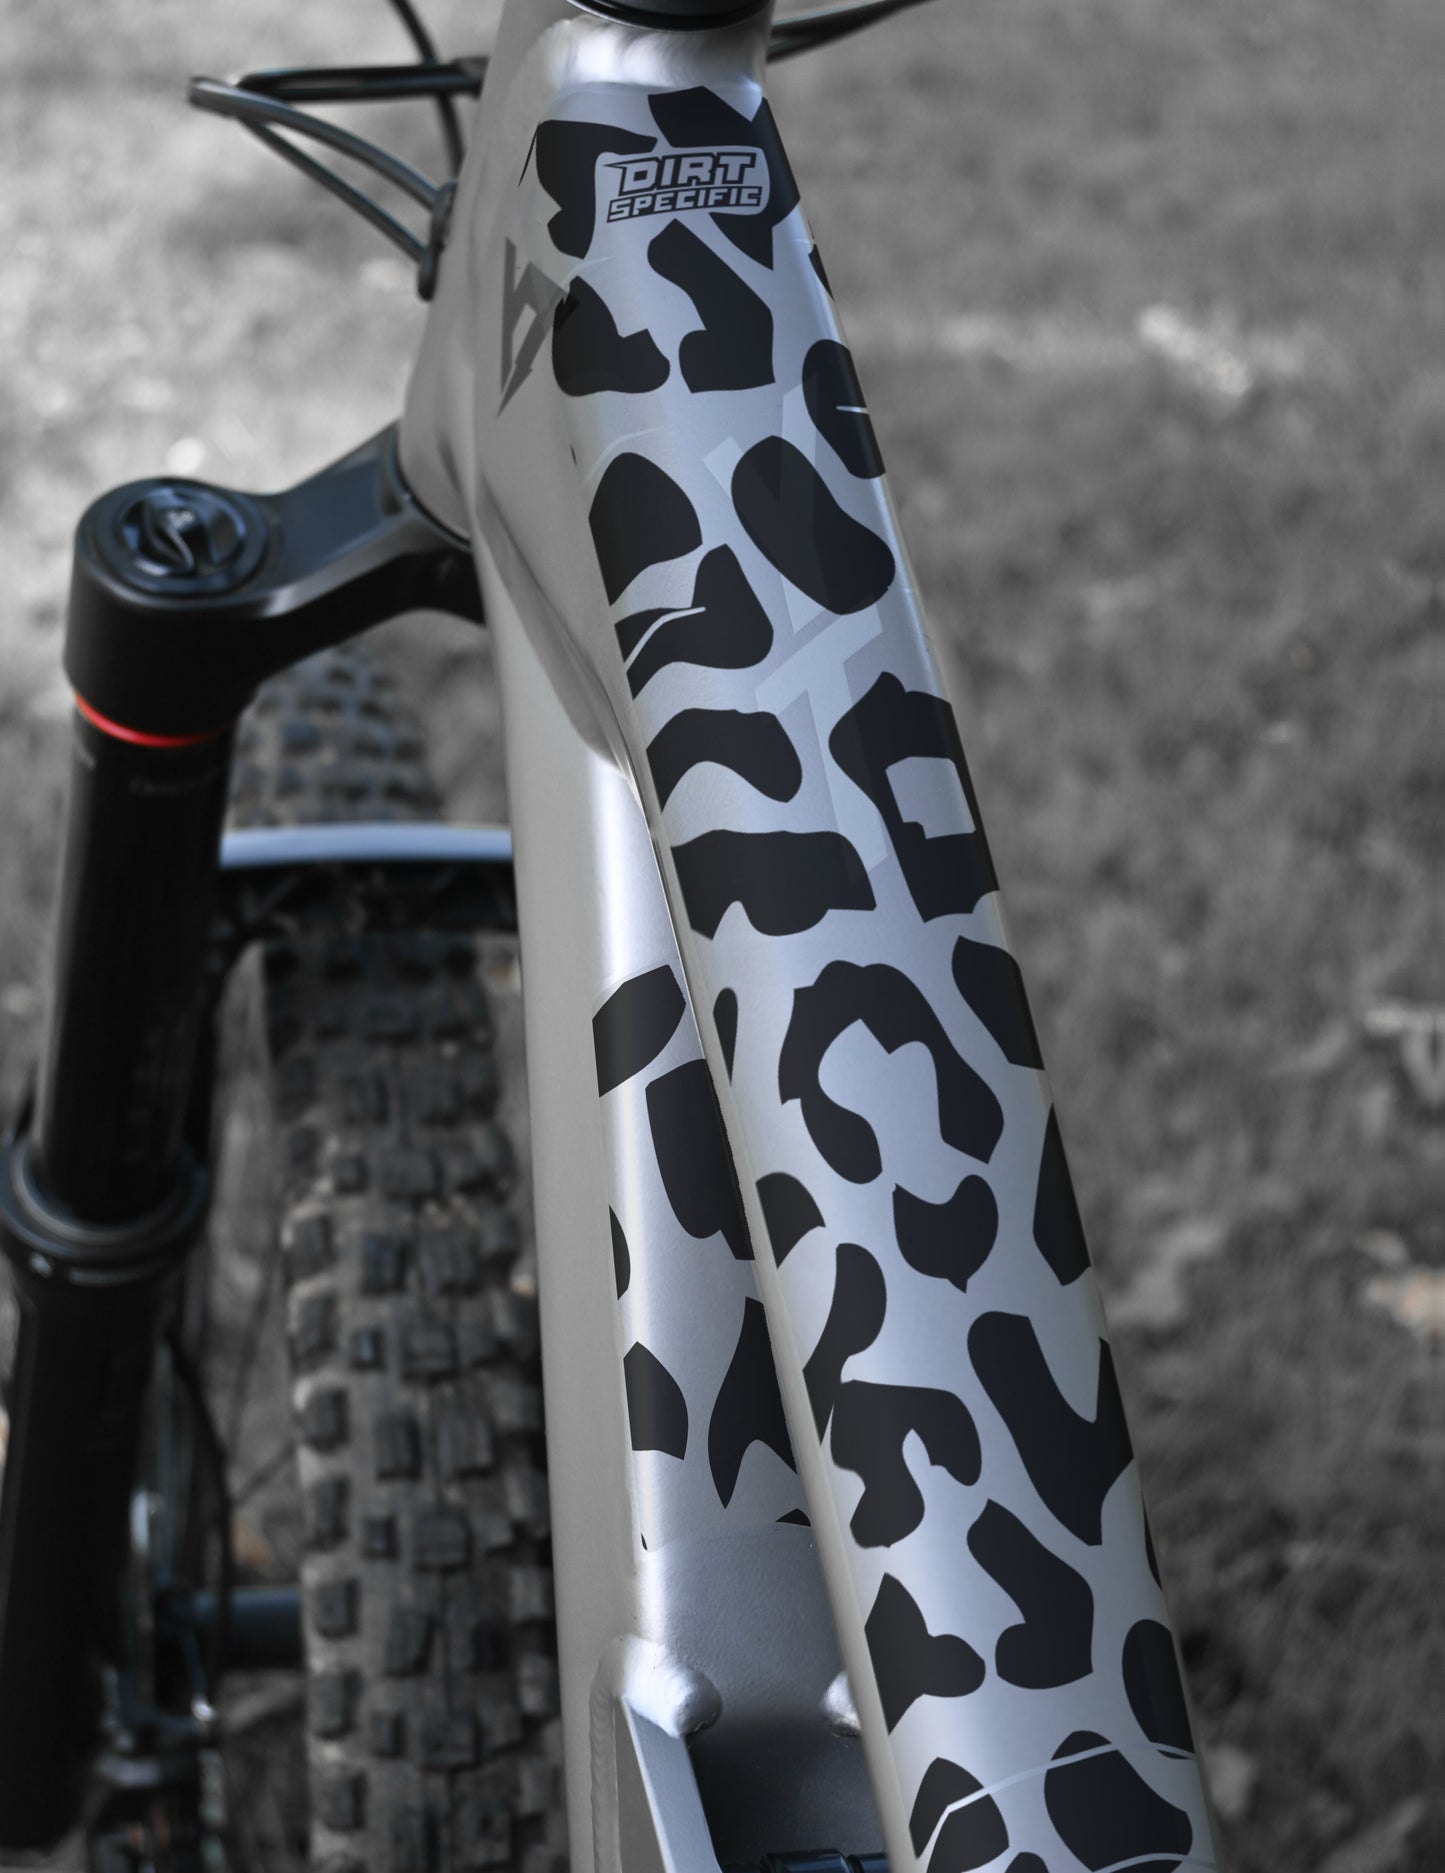 Black cheetah bike decal